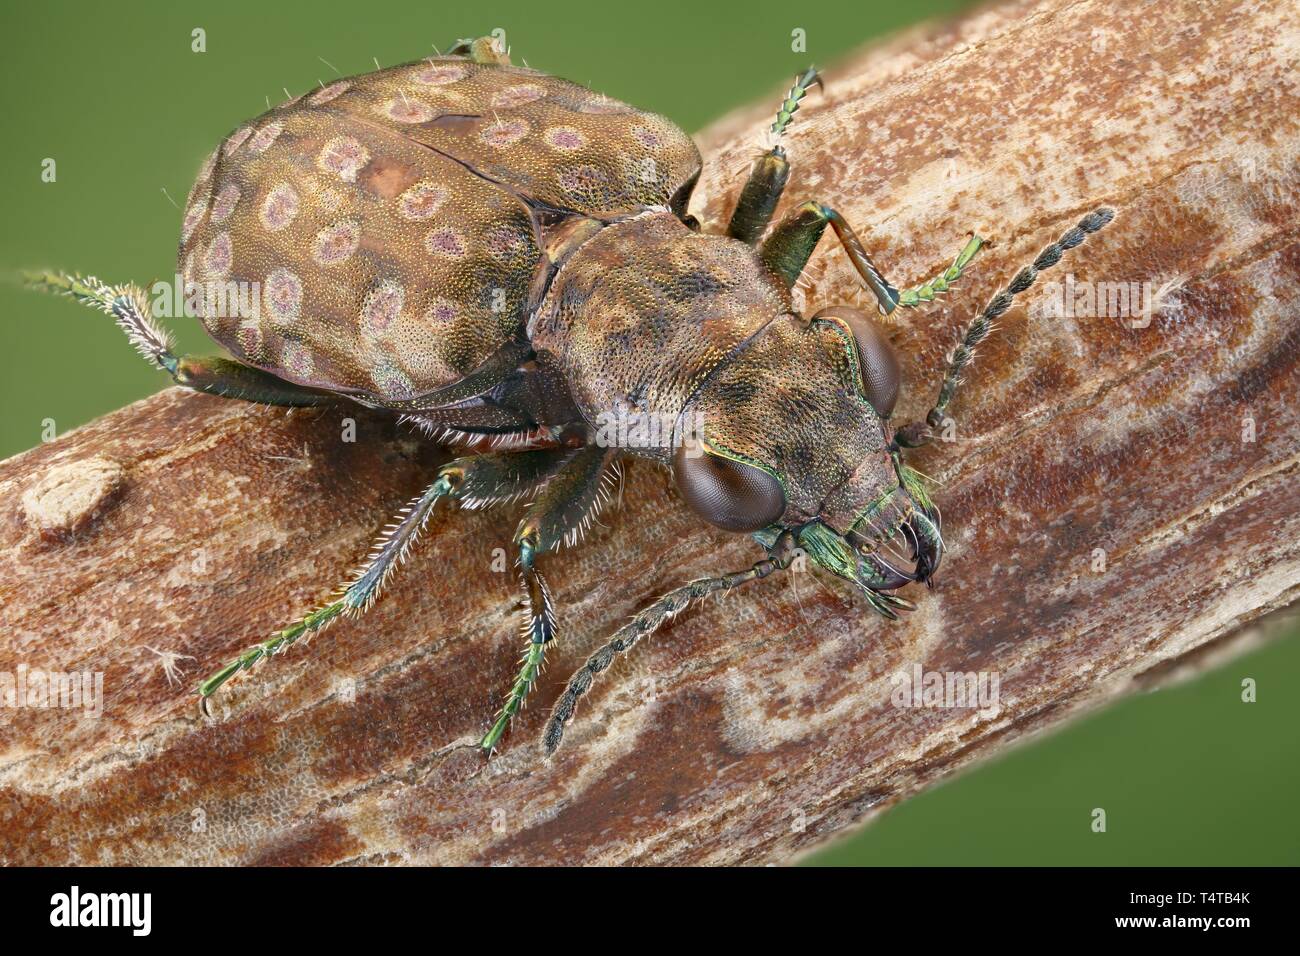 Ground beetle (Elaphrus riparius) on a branch Stock Photo